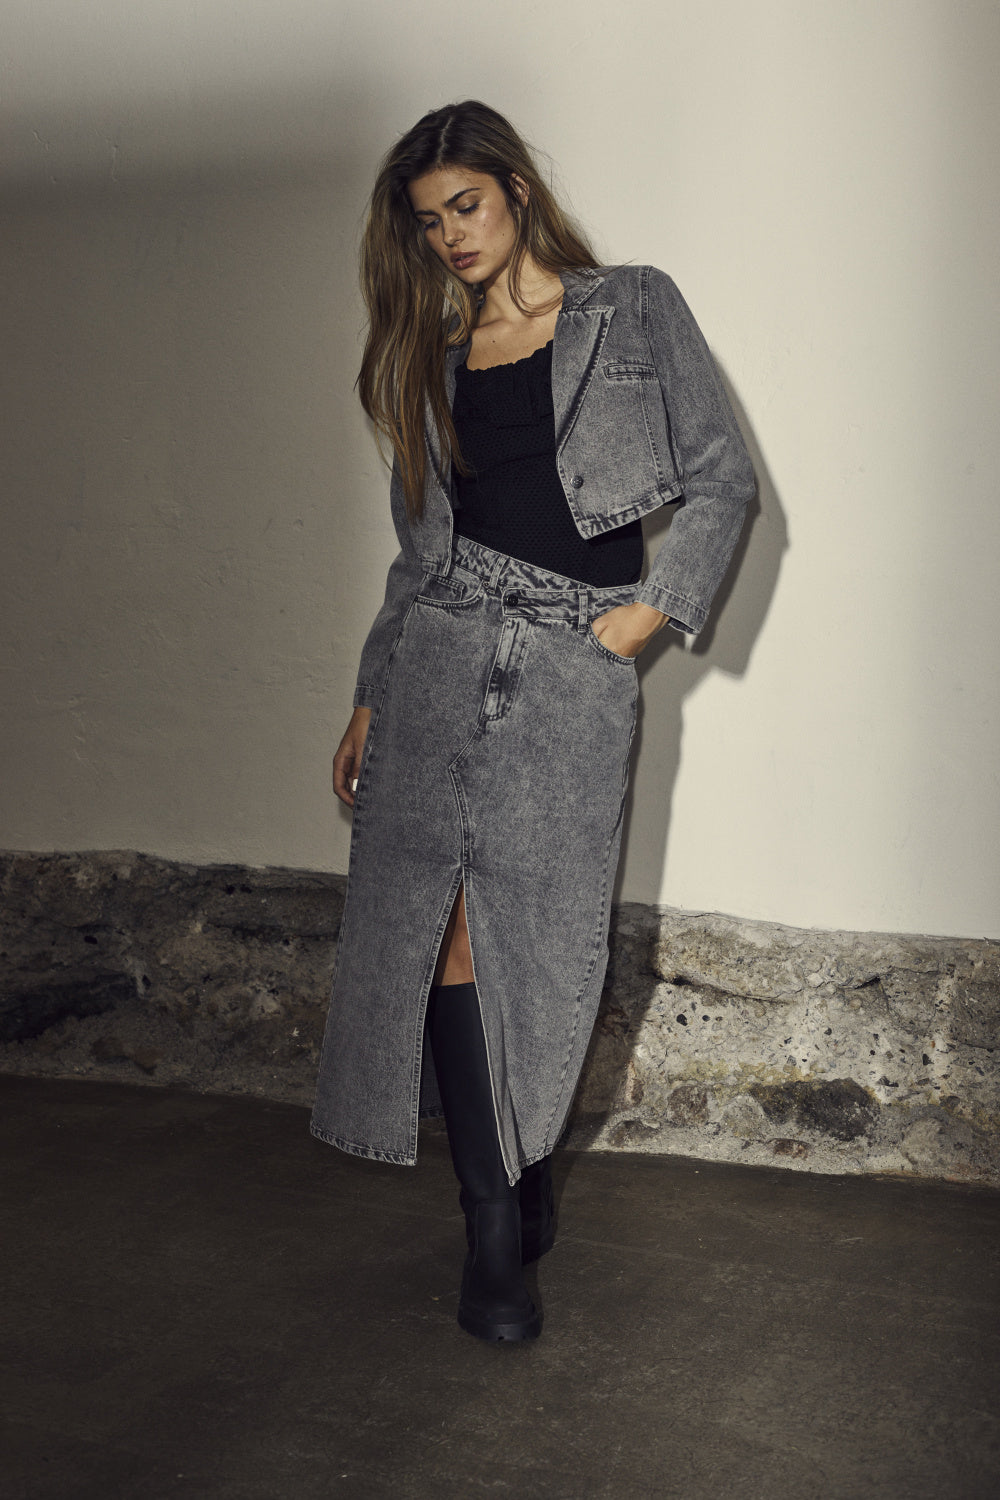 Co'Couture Vika Asym Slit Skirt - Mid Grey - RUM Amsterdam